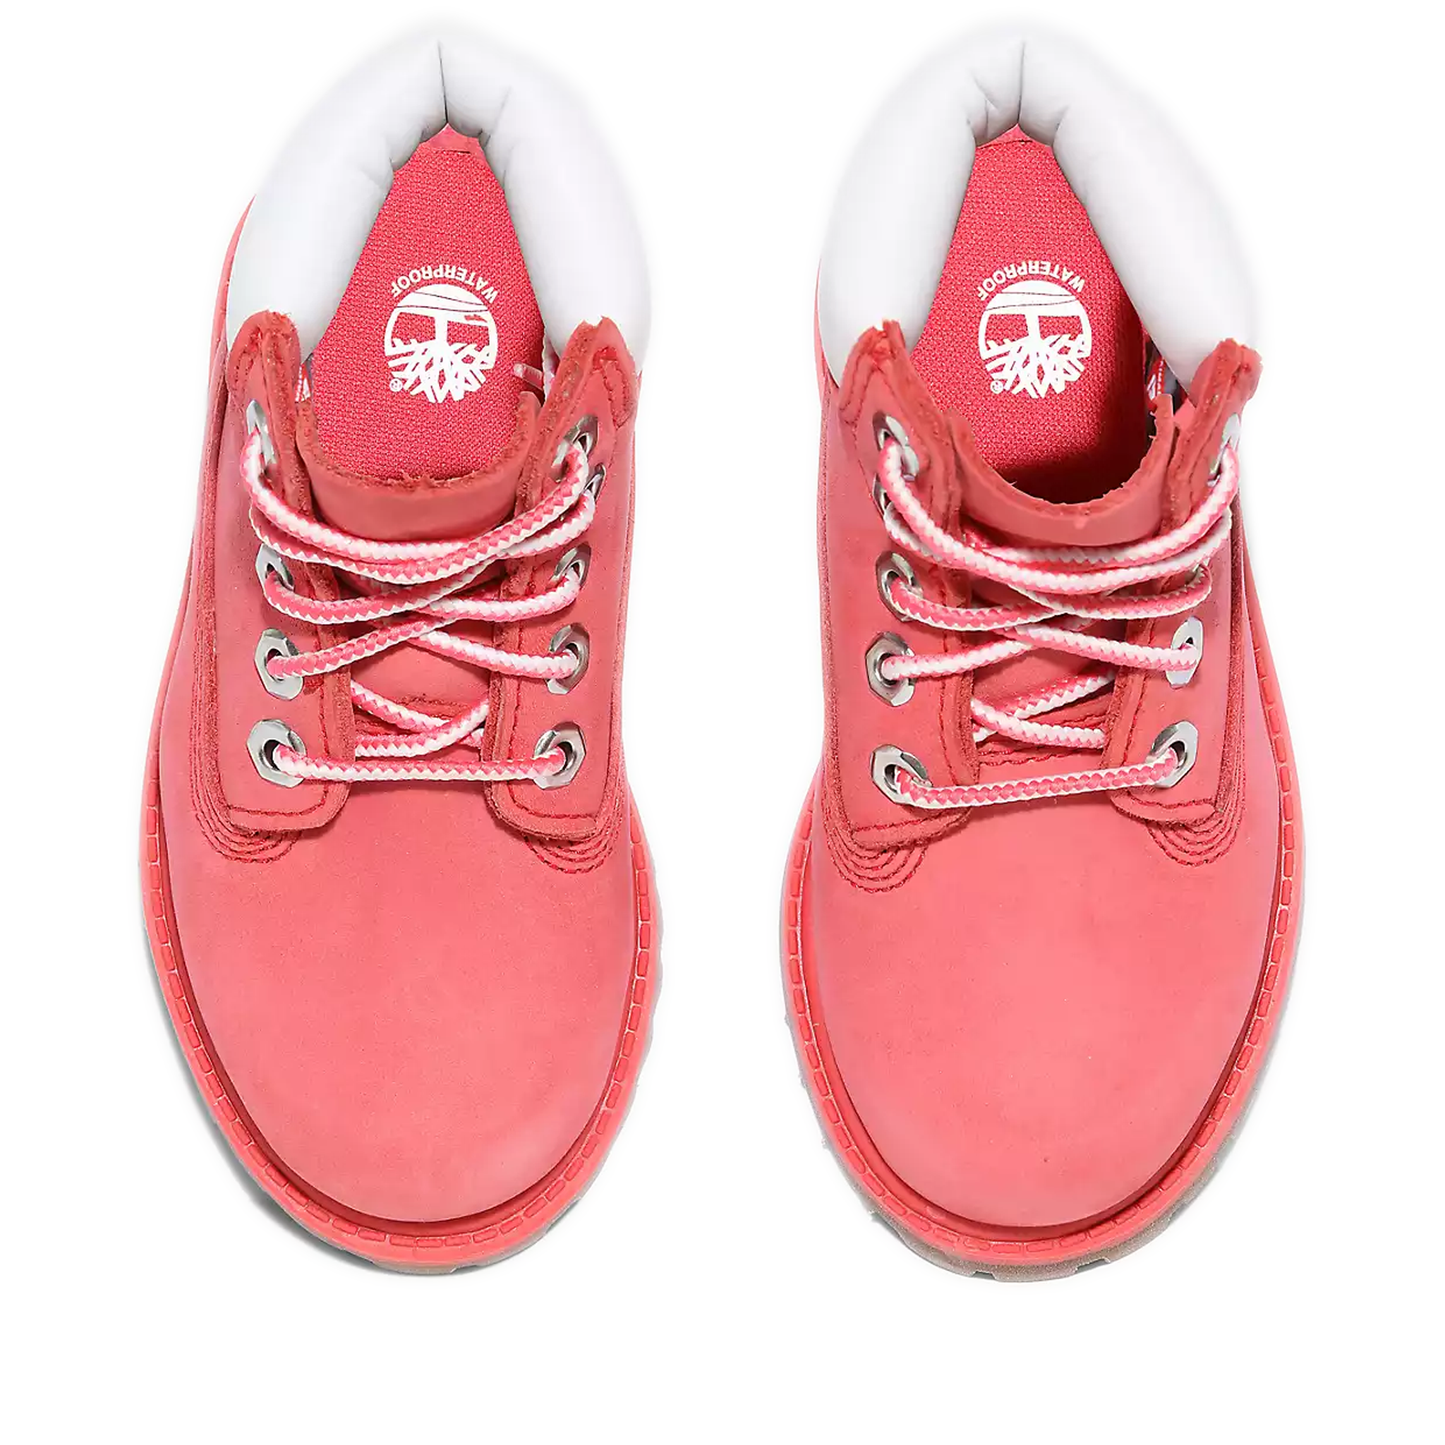 Infants Timberland Premium 6-Inch Waterproof Boot - Medium Pink Nubuck